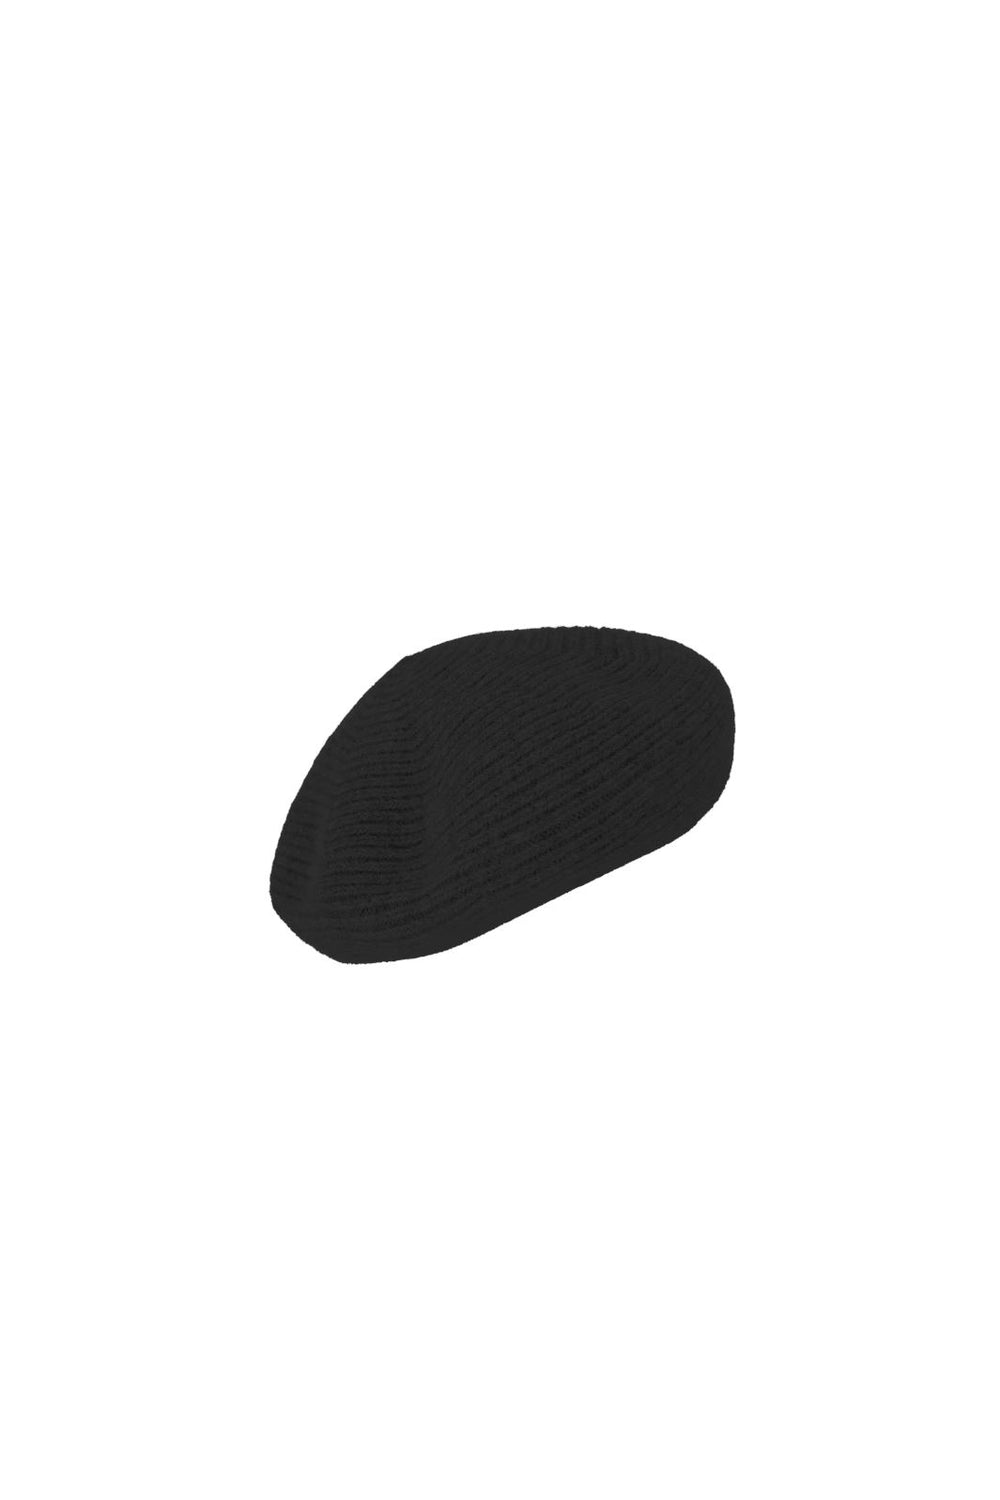 Black Colour - Bcamy Knitted Baret Hat - Black